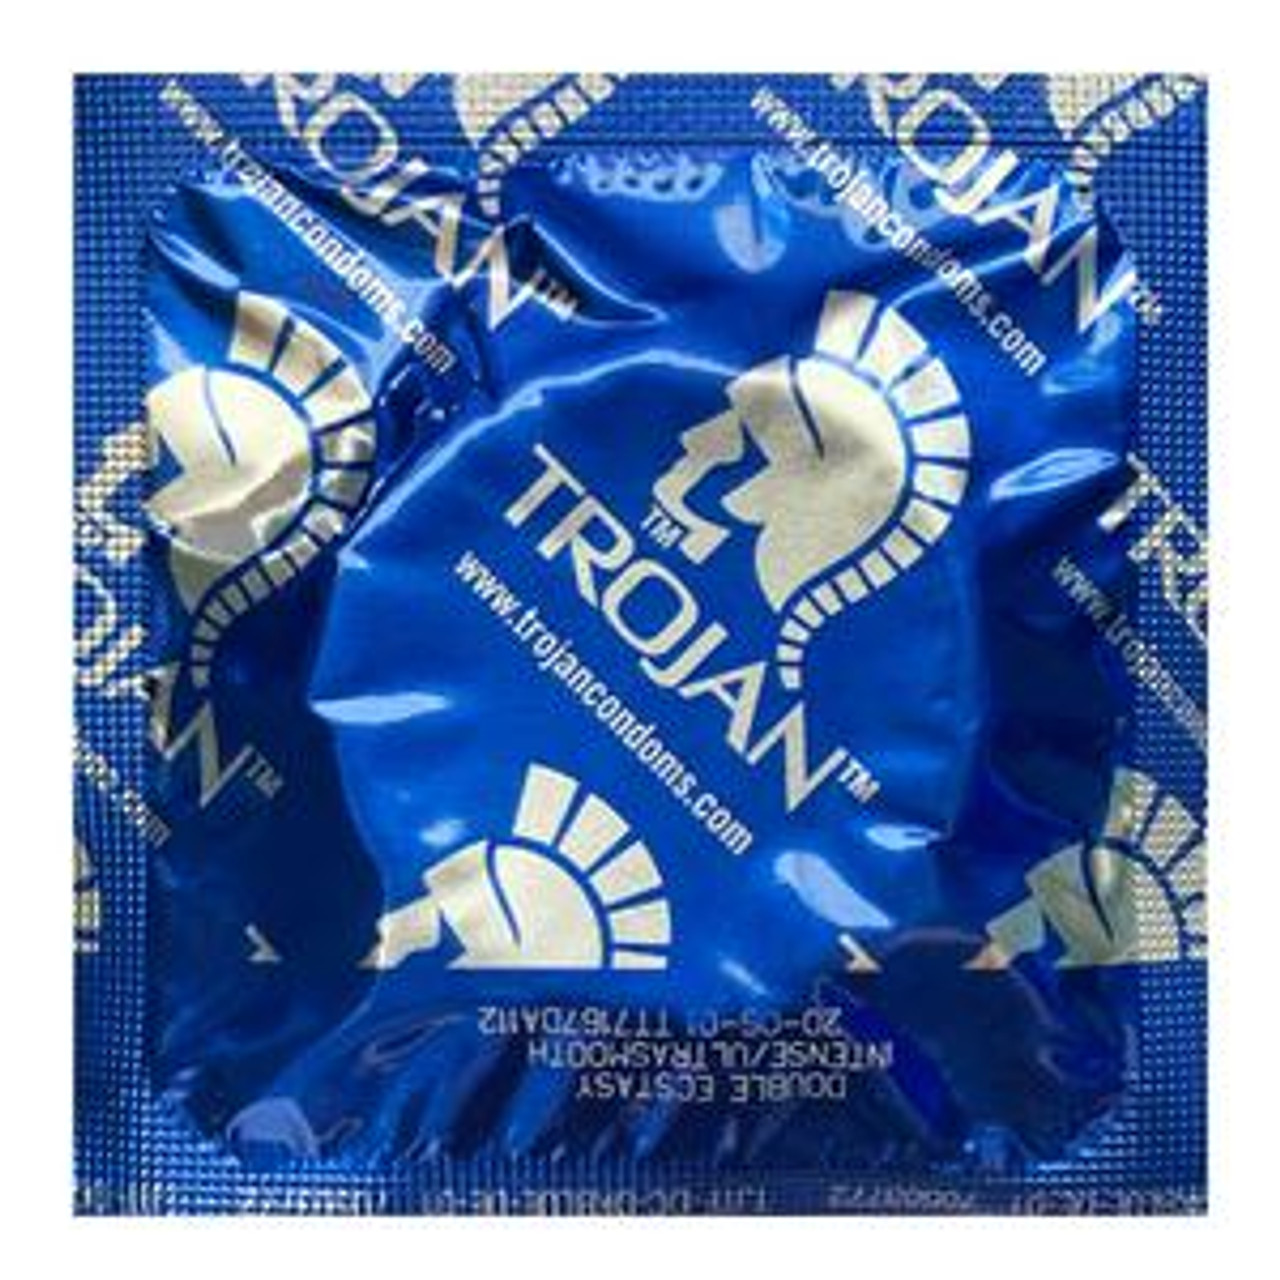 Trojan Double Ecstasy Condoms | Buy Trojan Condoms online from CondomDepot.com